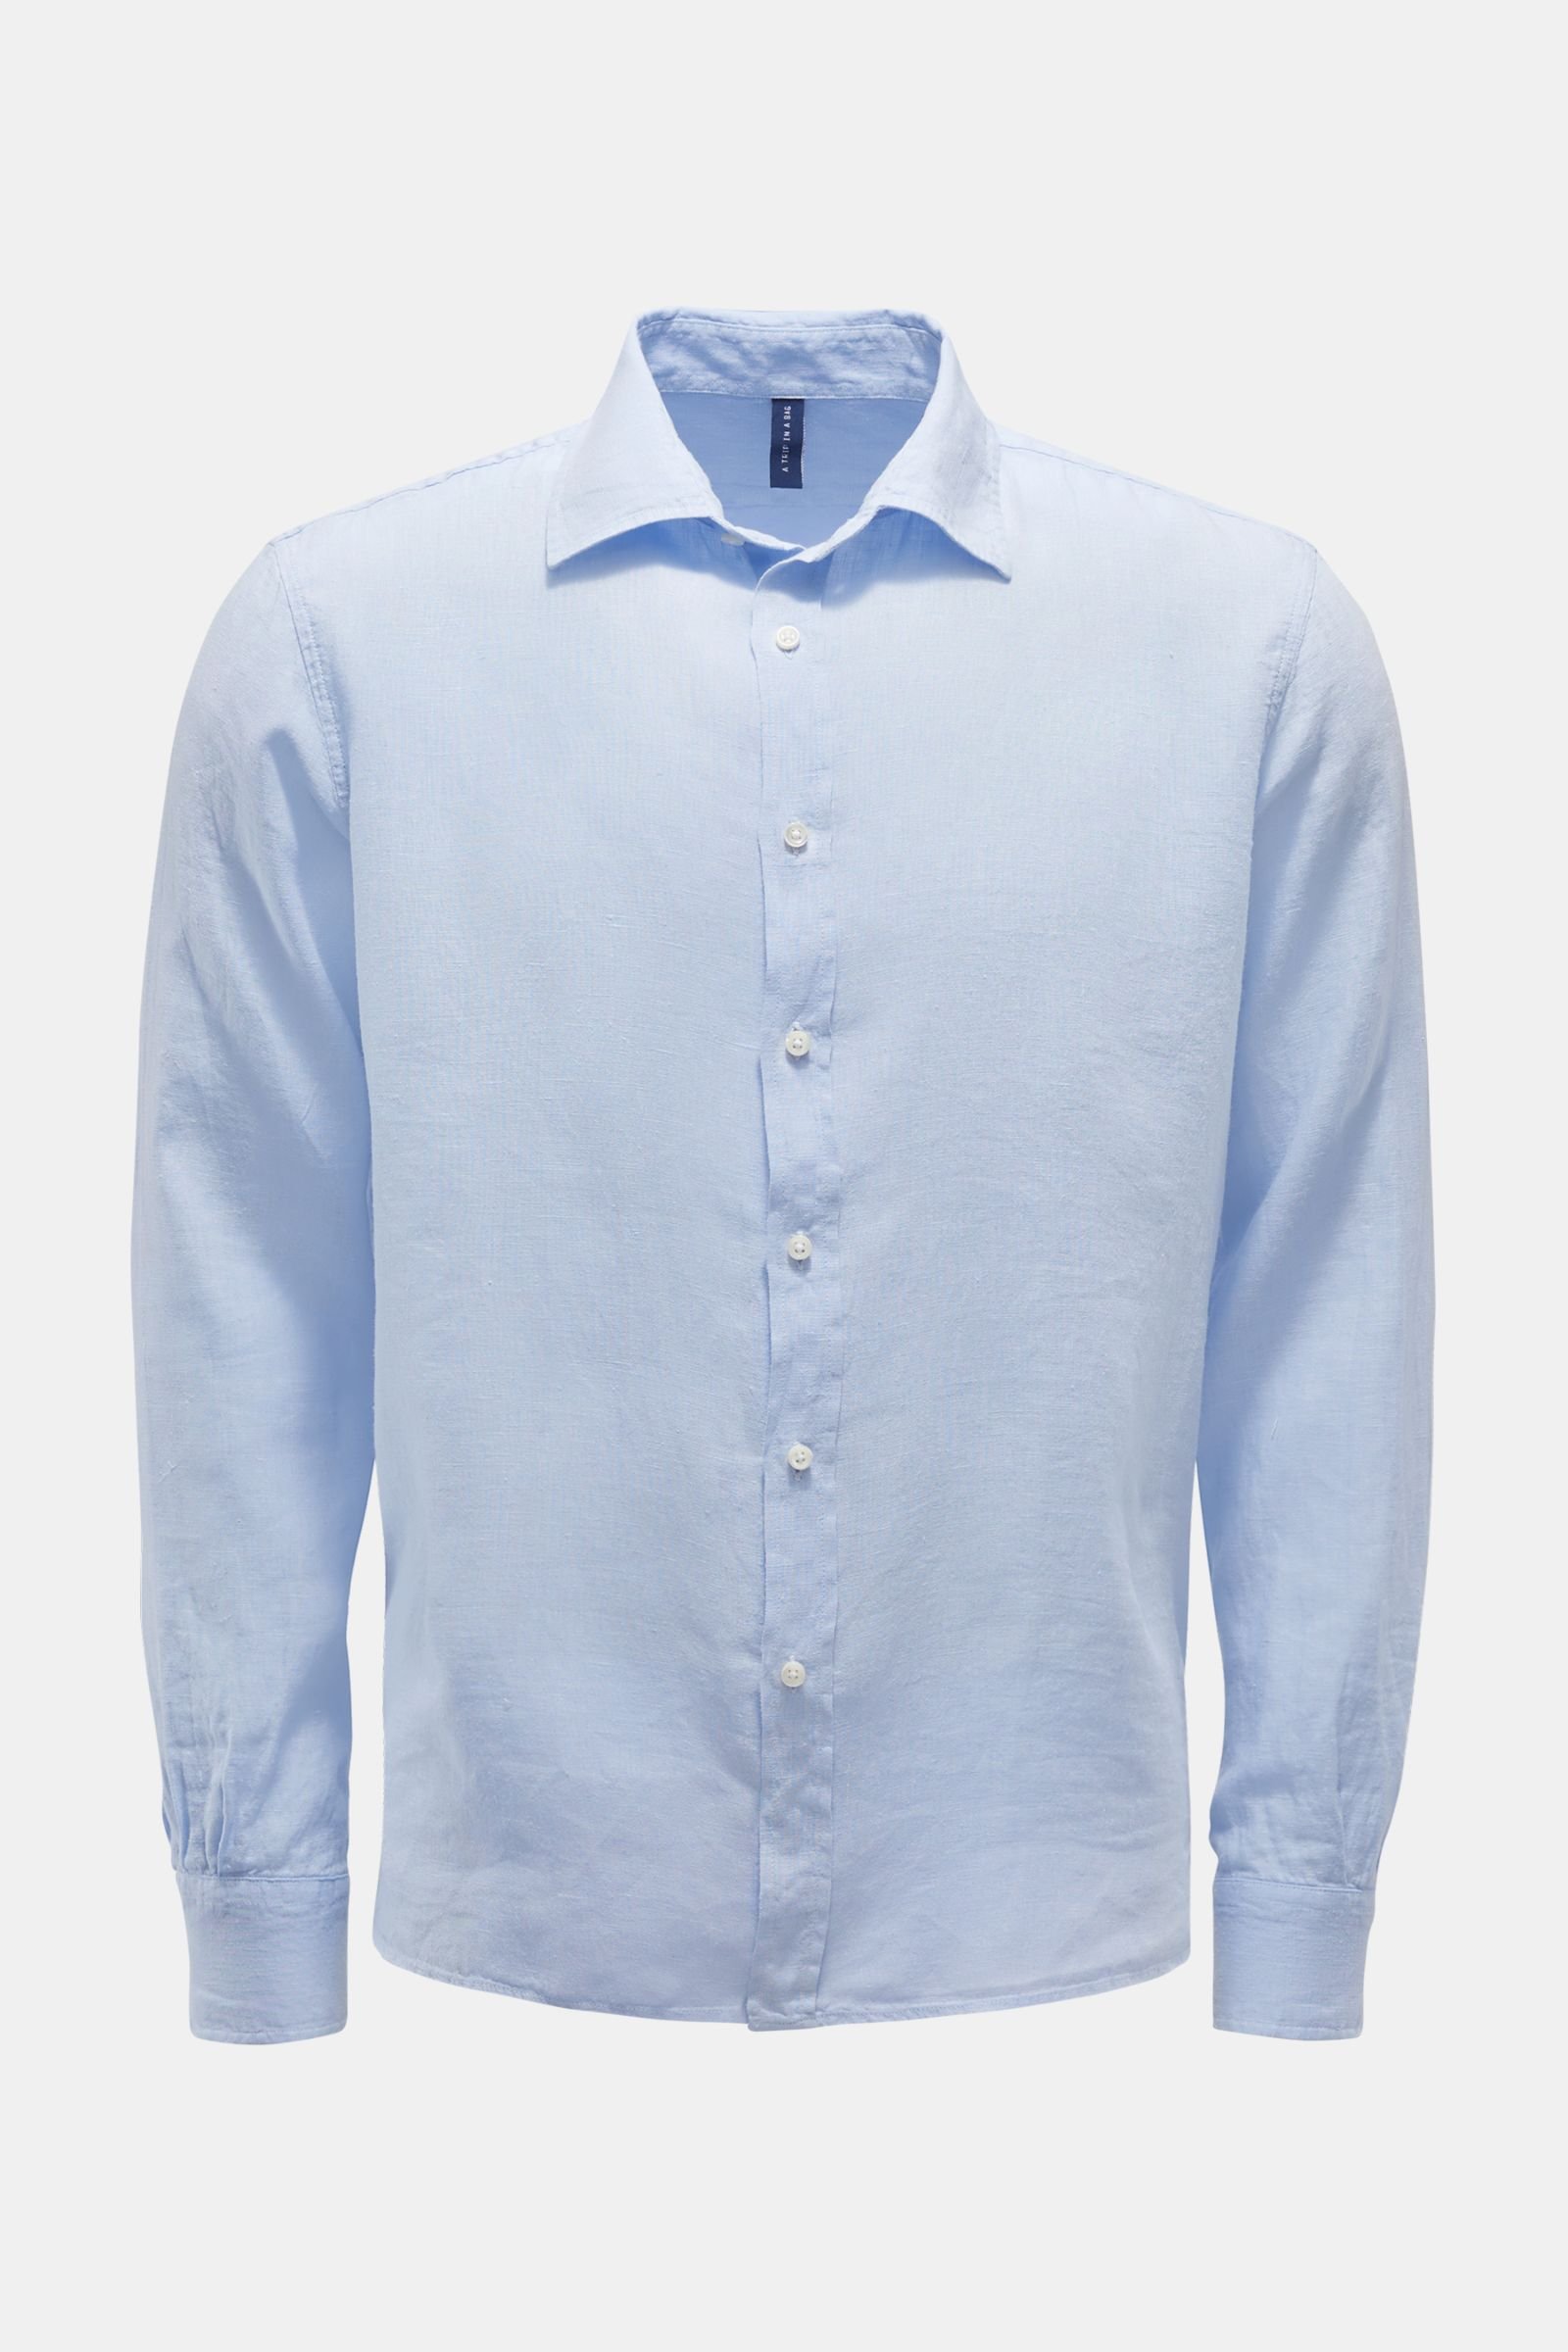 Leinenhemd 'Linen Shirt' Haifisch-Kragen hellblau